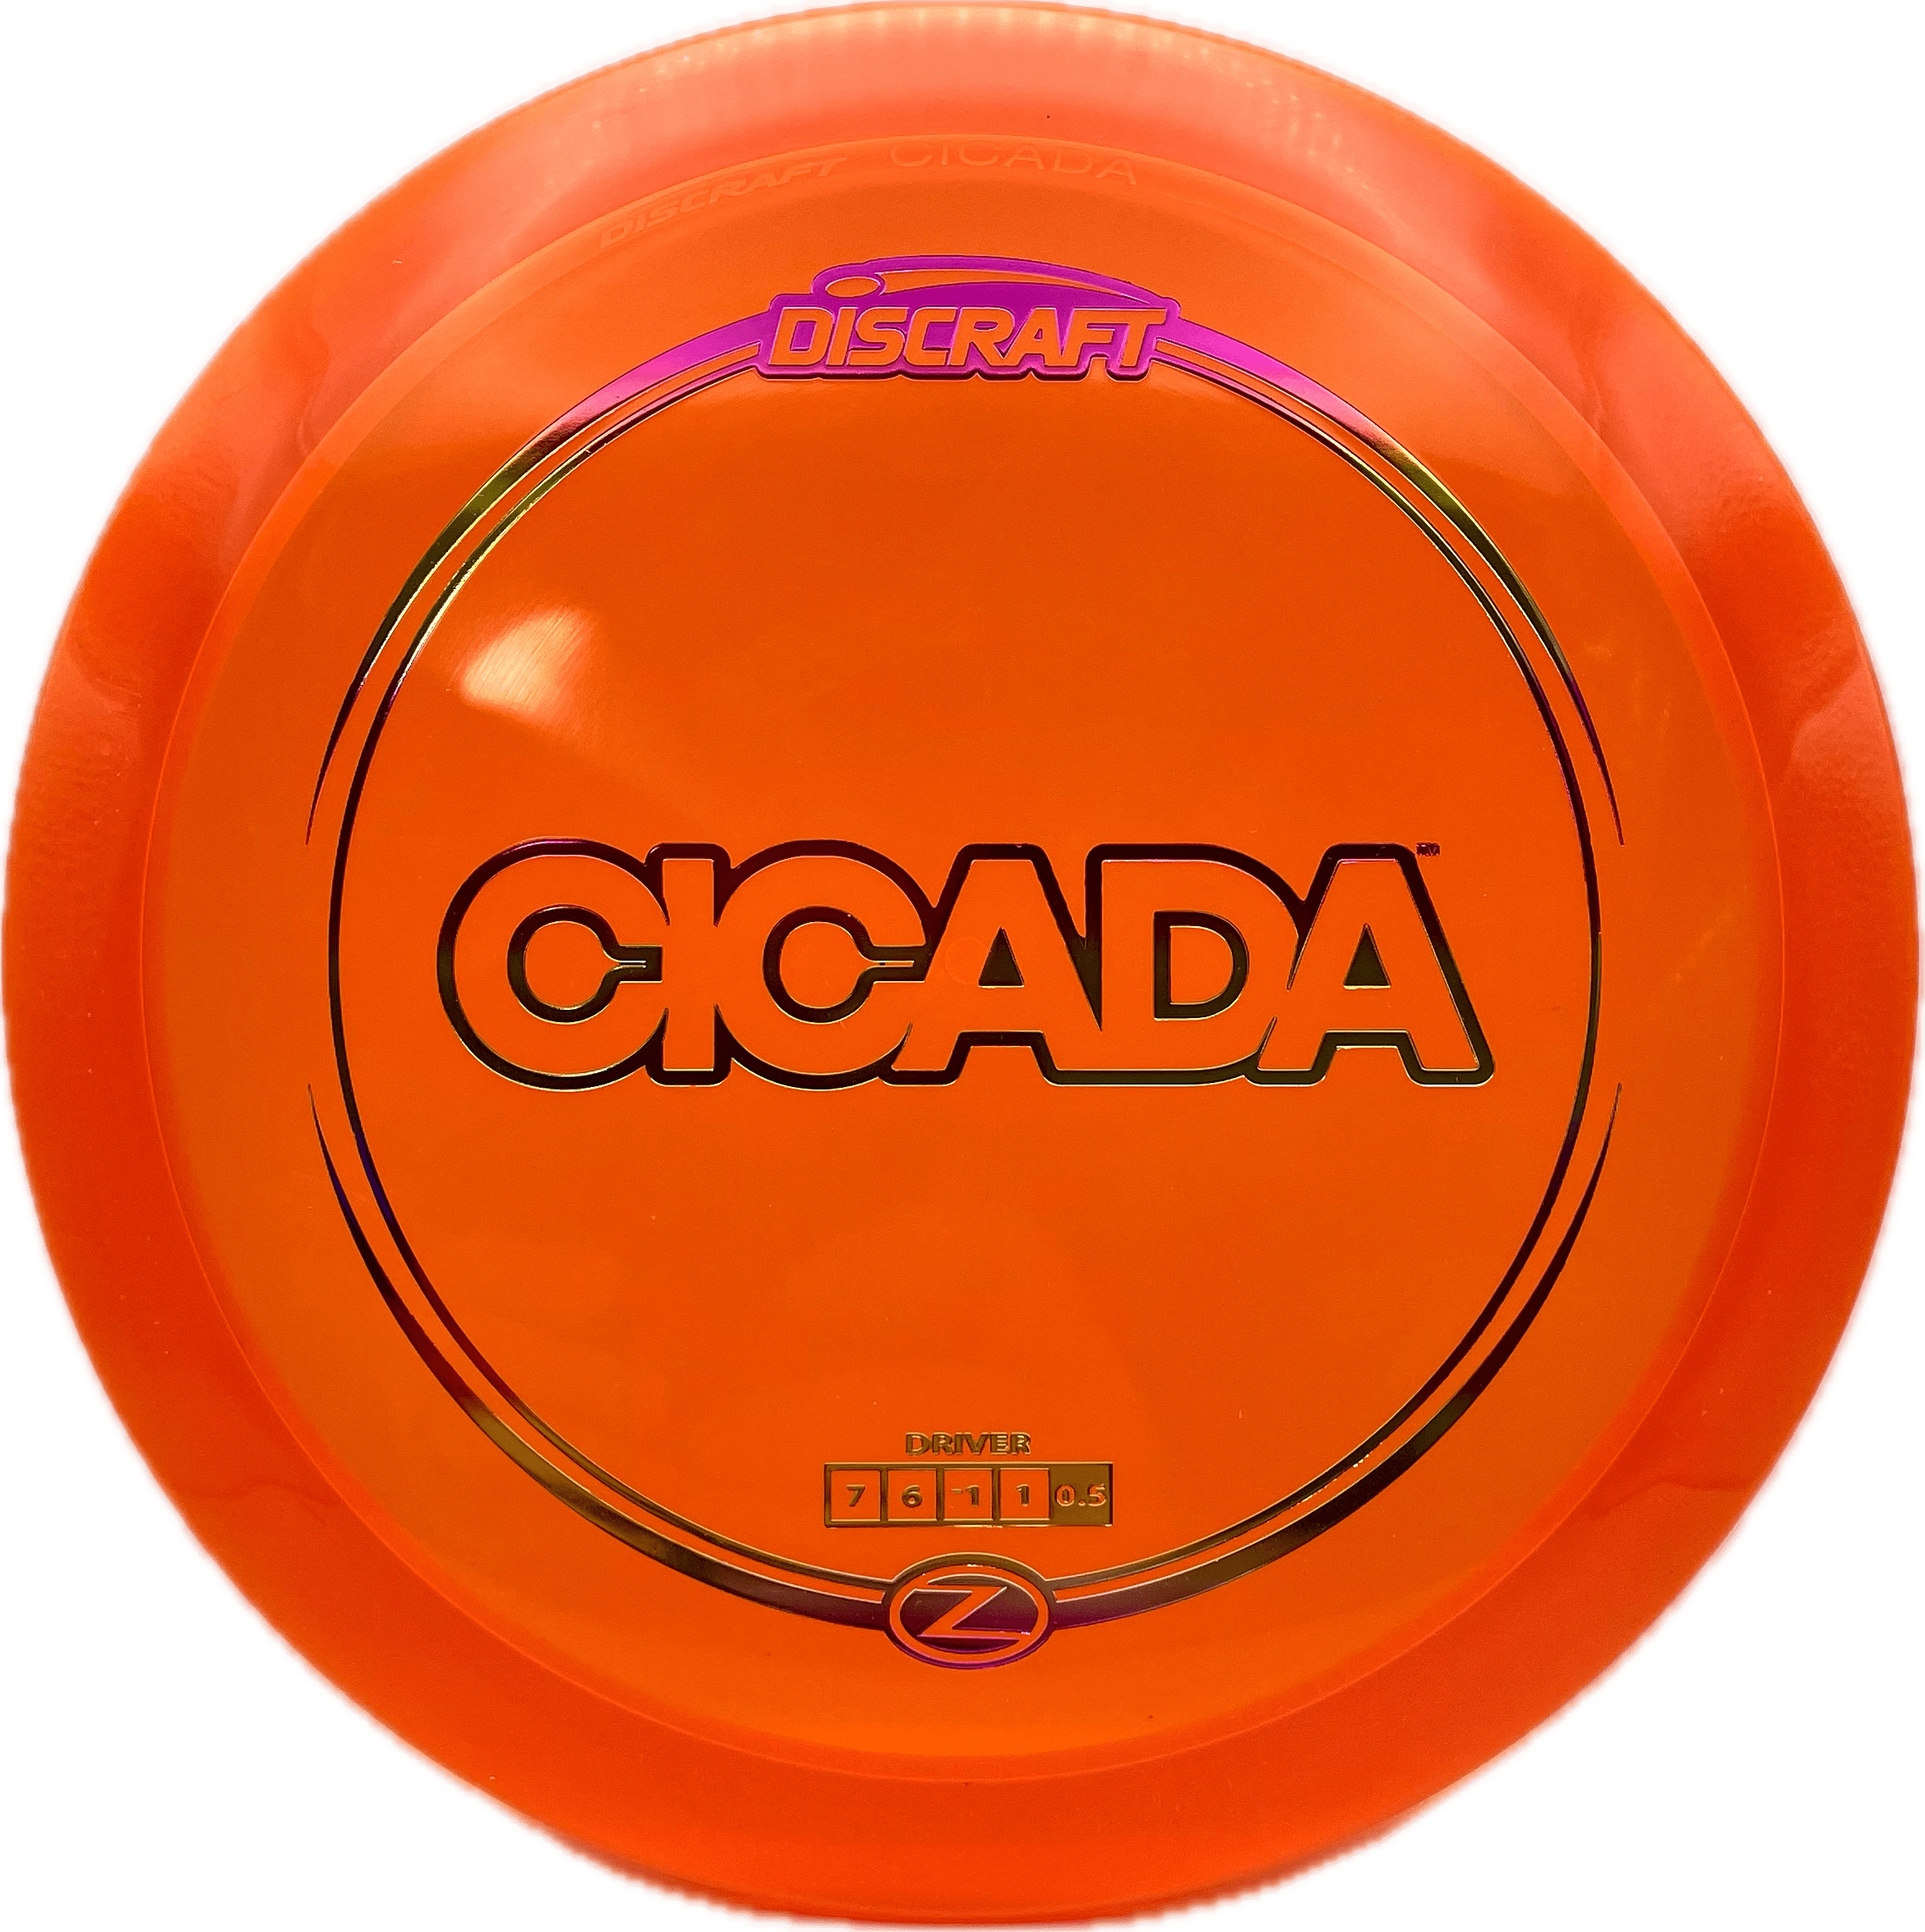 Overthrow Disc Golf Disc Discraft Cicada, Z, 167-169, Orange, Summer Sunset